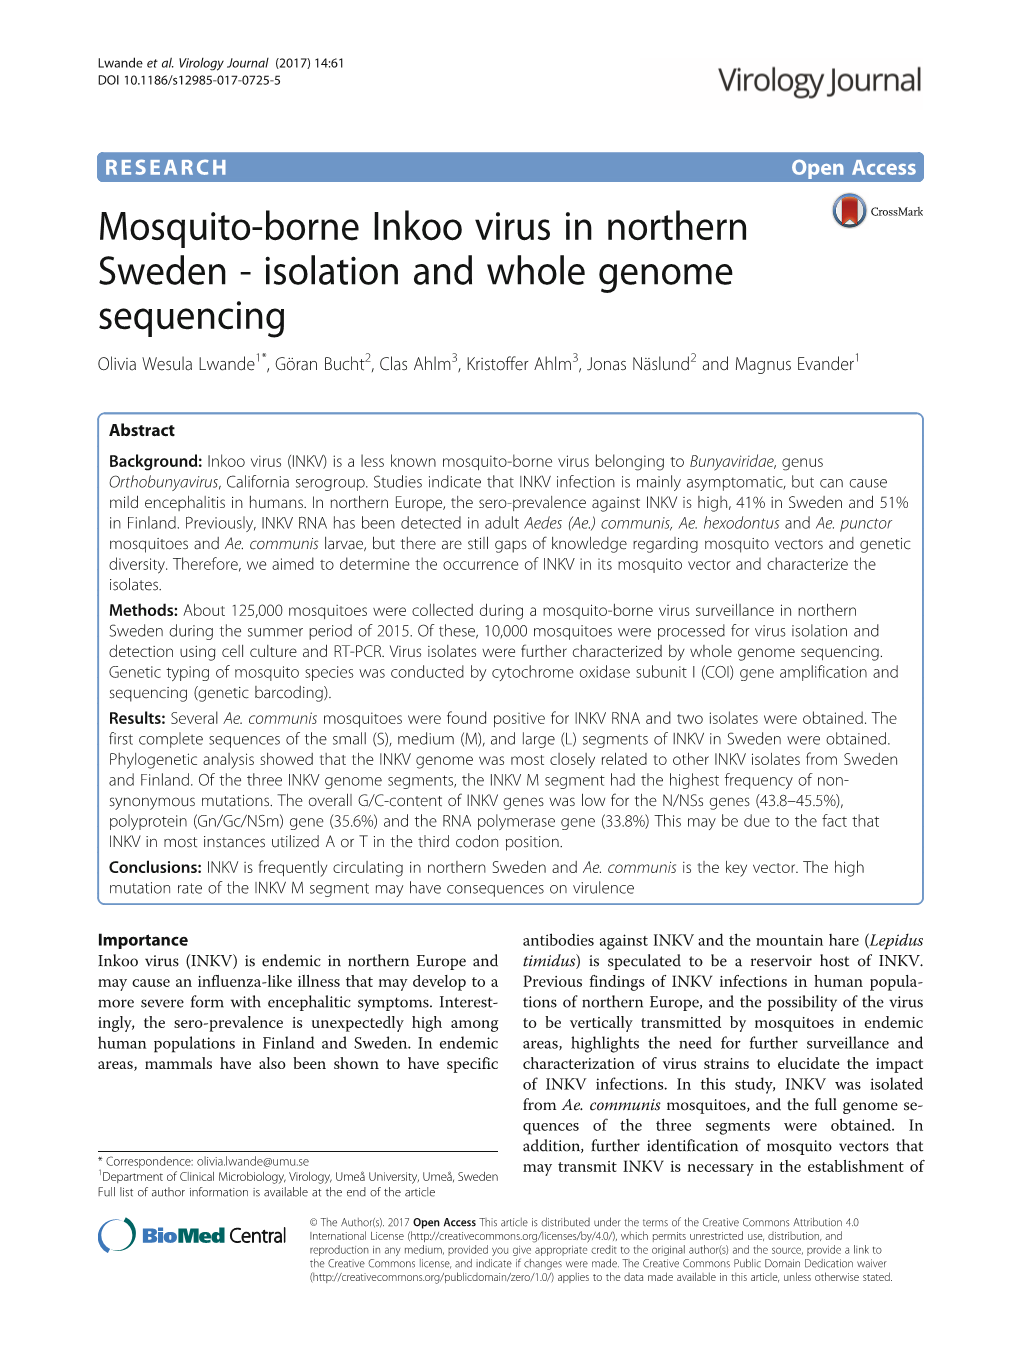 Mosquito-Borne Inkoo Virus in Northern Sweden